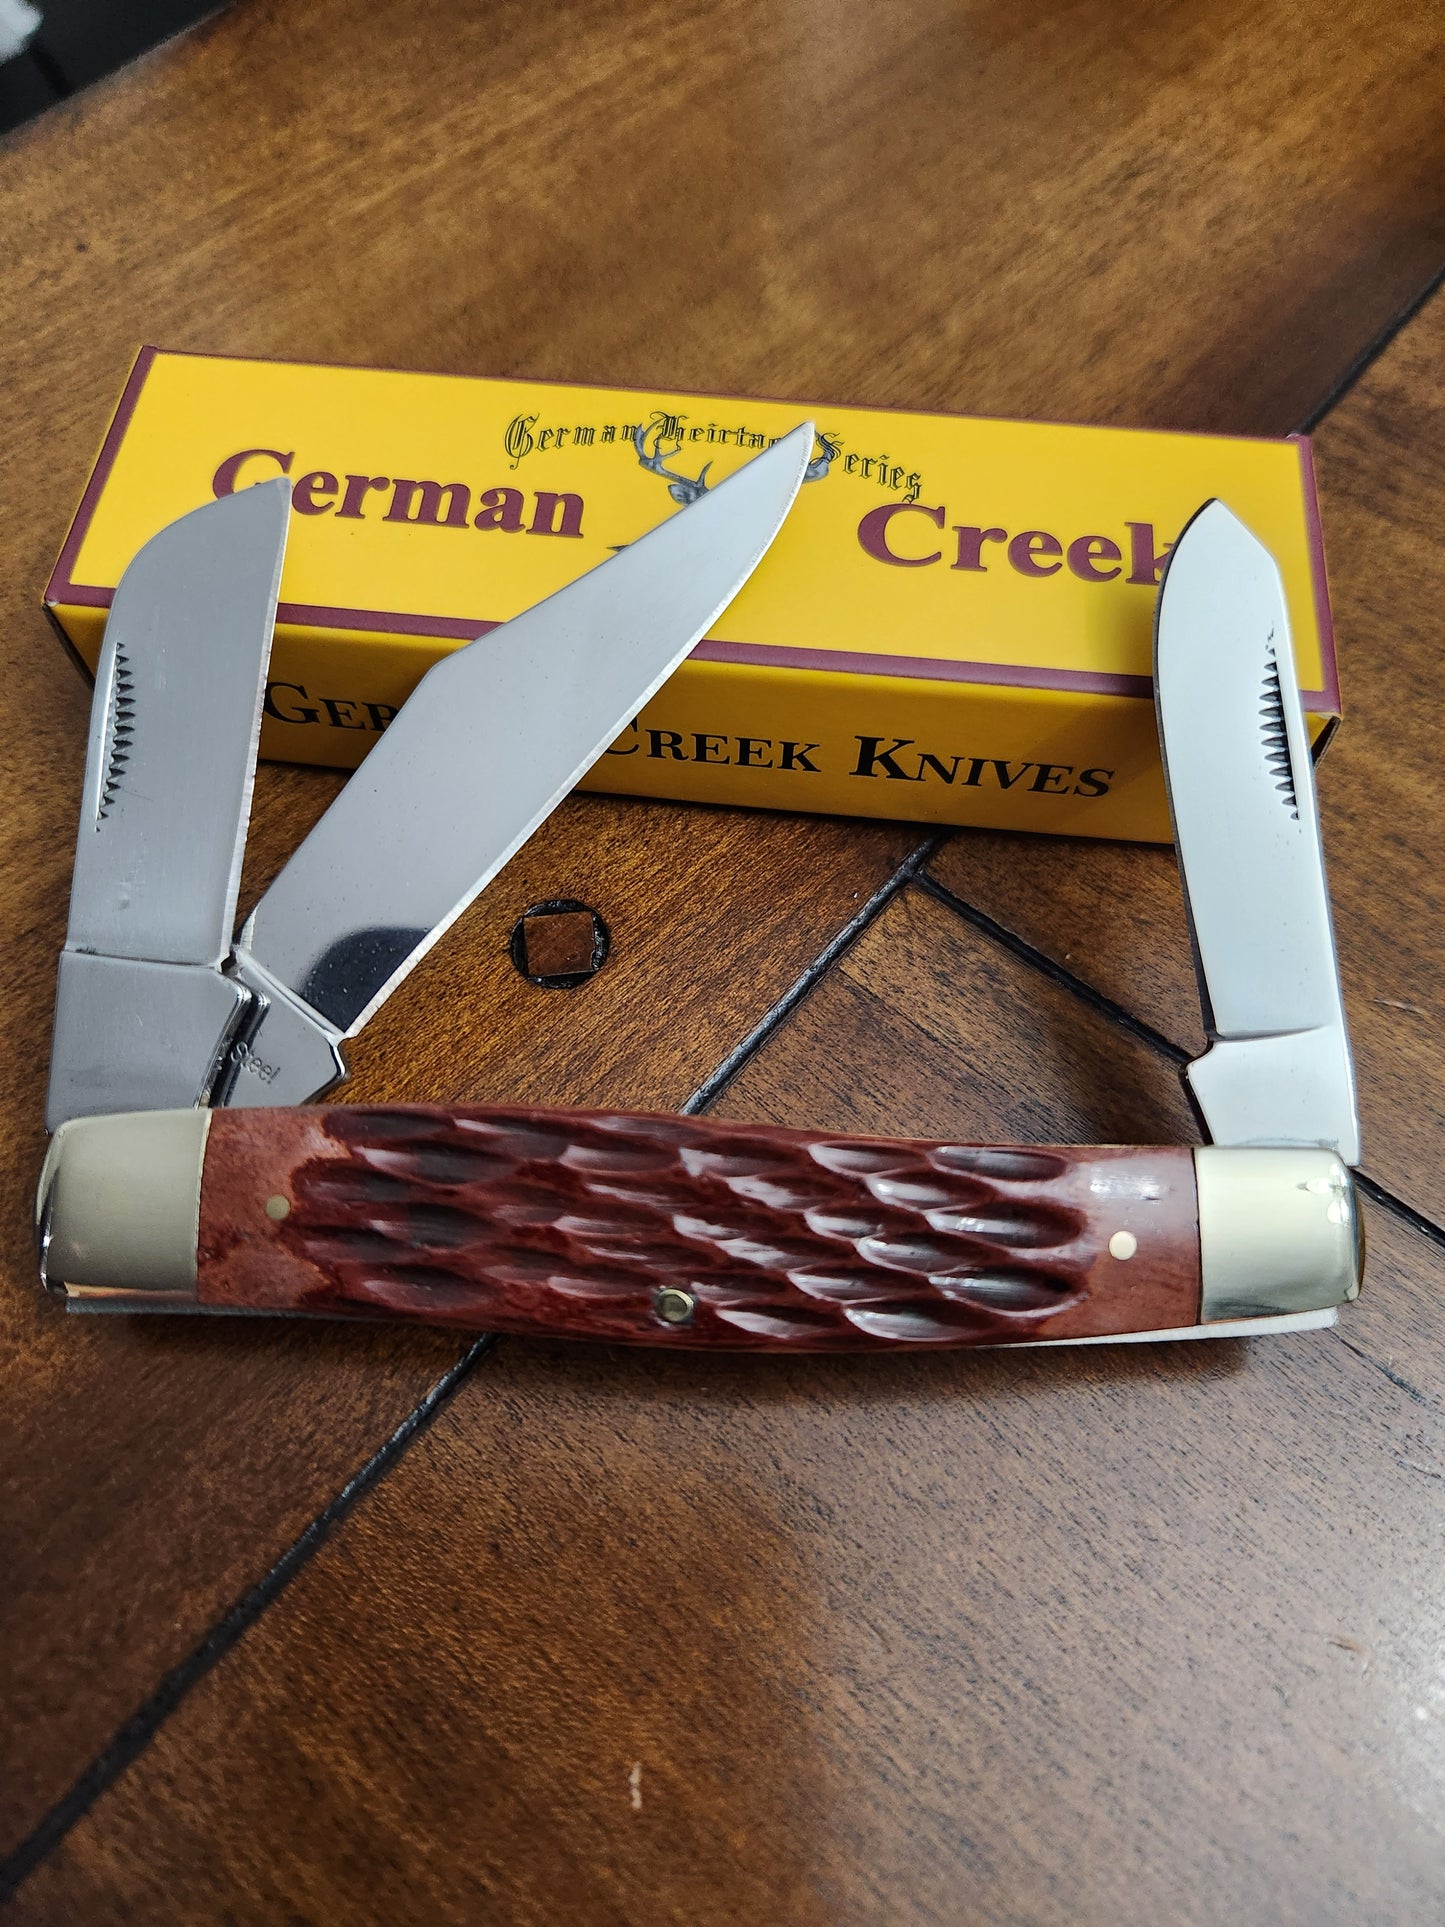 GERMAN CREEK 4 1/4" Large Stockman Pocket Knife Three Blade Brown Jigged Bone Handle NEW!!!